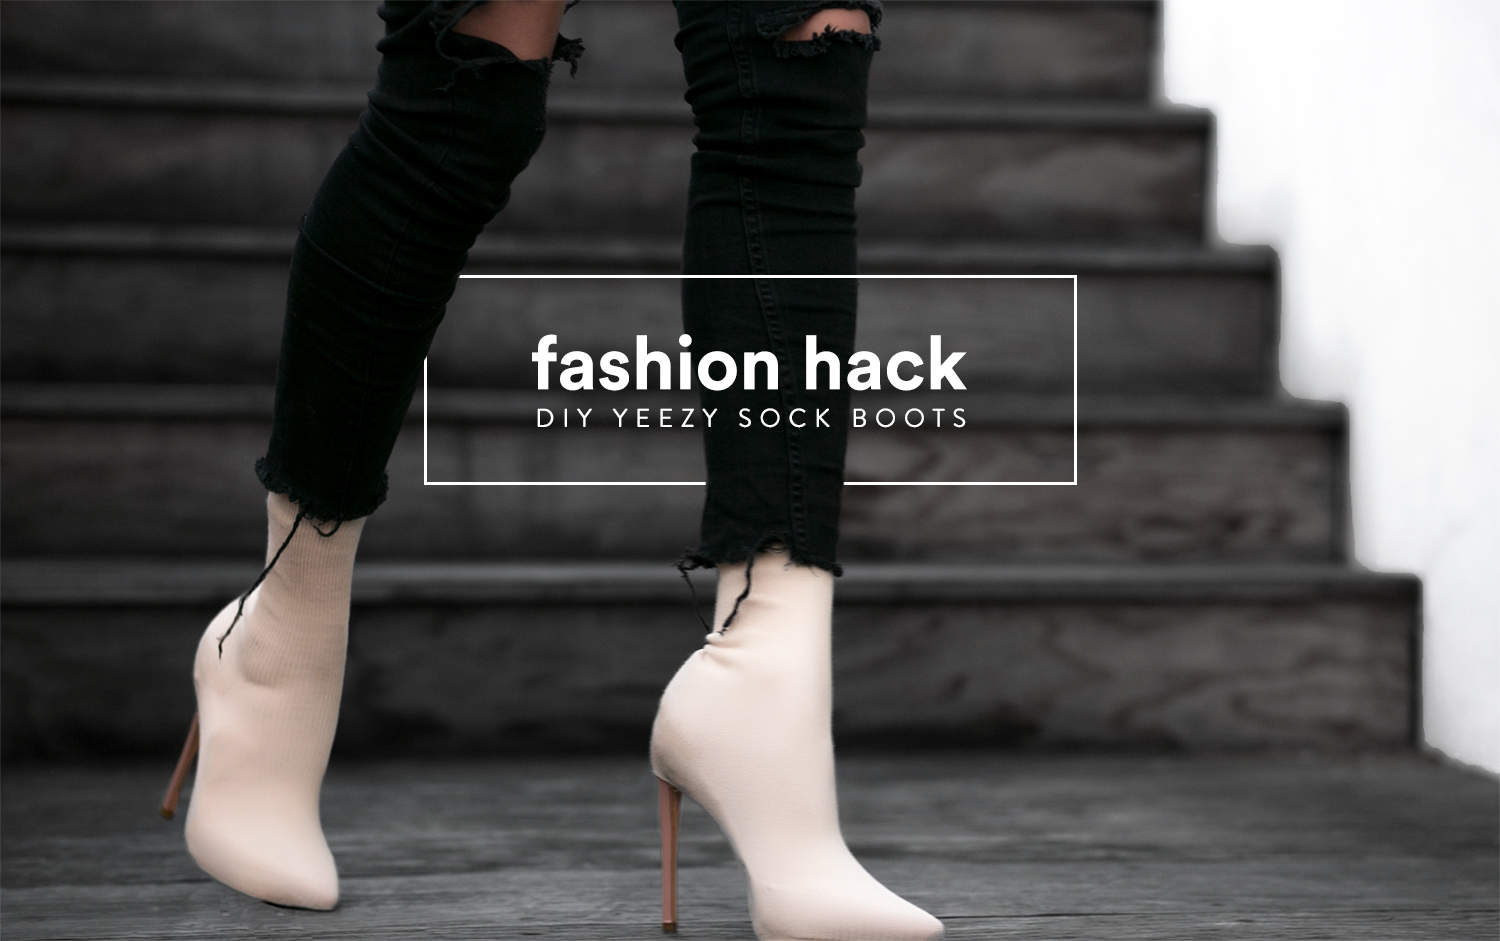 DIY Yeezy Sock Boots